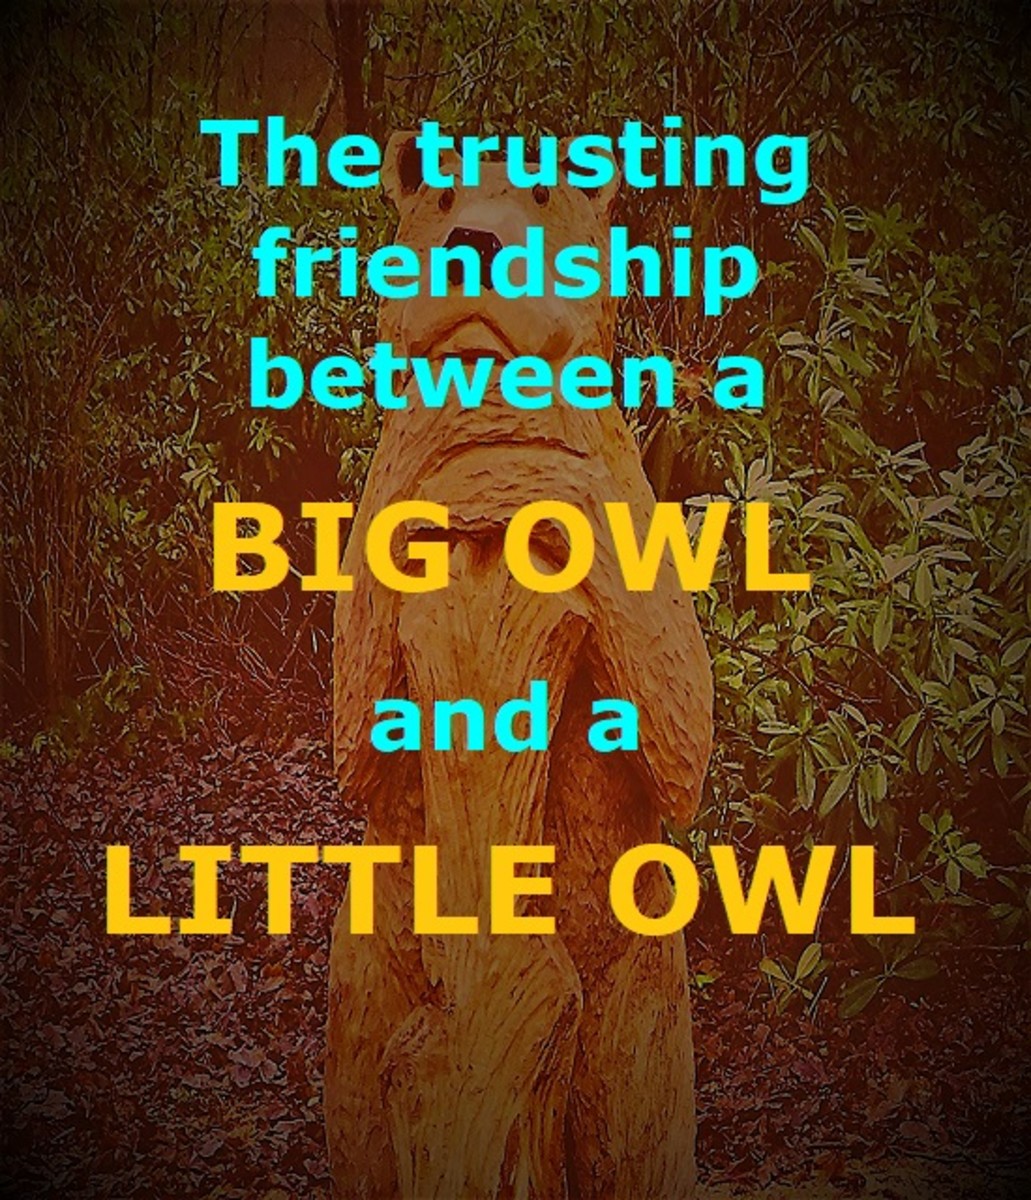 little-owl-a-friendship-poem